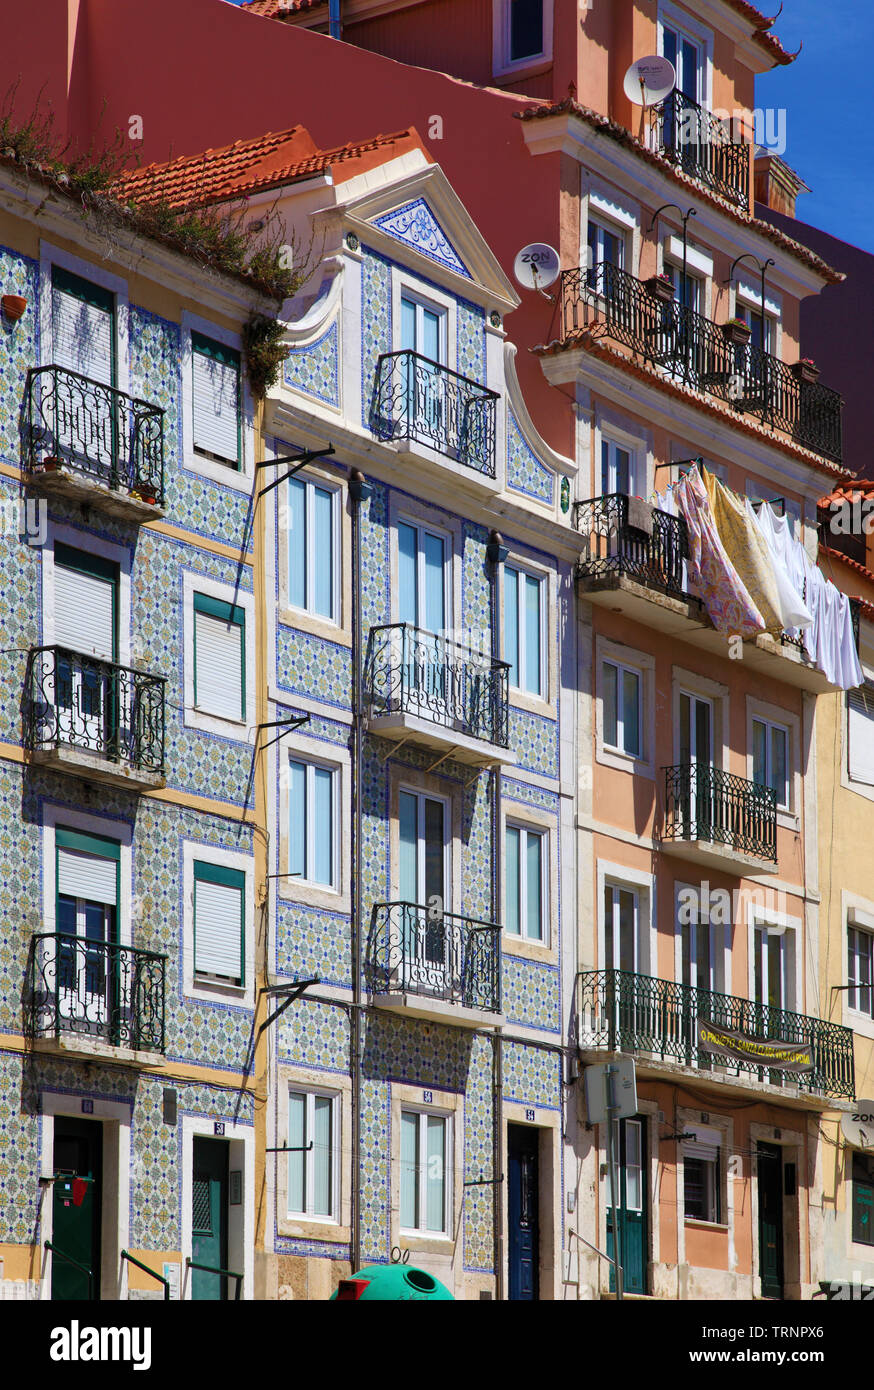 Portugal, Lisbon, Alfama, street scene, houses, azulejos, paited ceramic tiles, Stock Photo